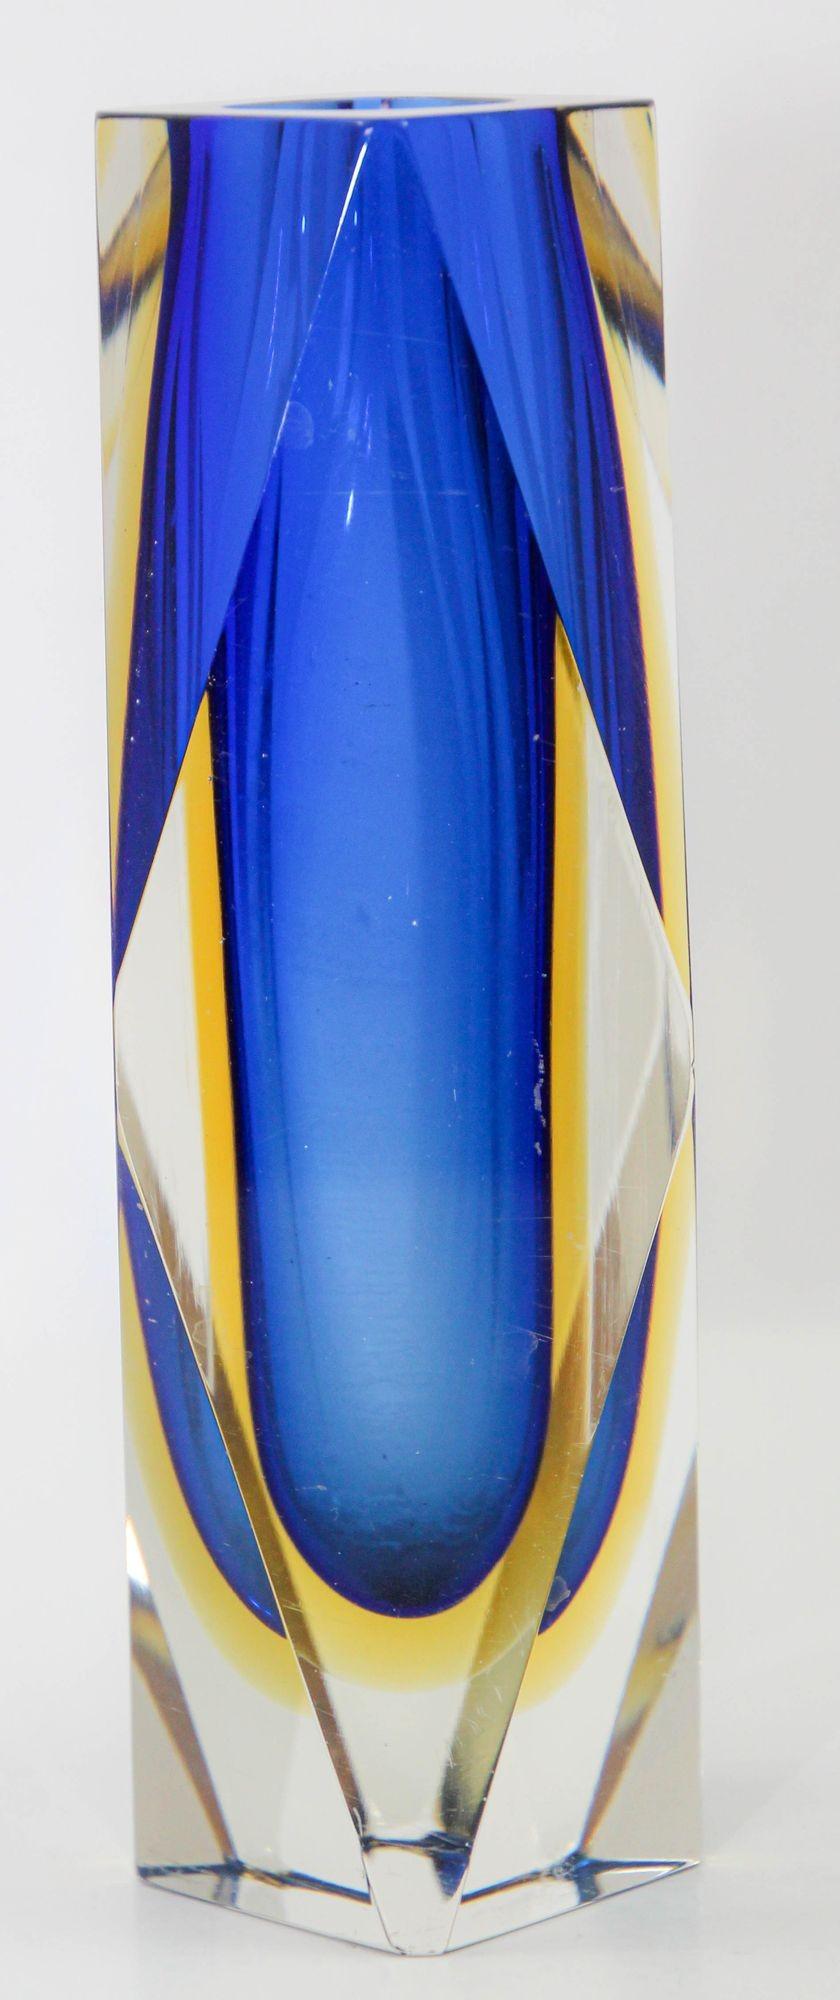 20th Century Alessandro Mandruzzato Blue and Yellow Sommerso Murano Vase, Italy 1960s For Sale